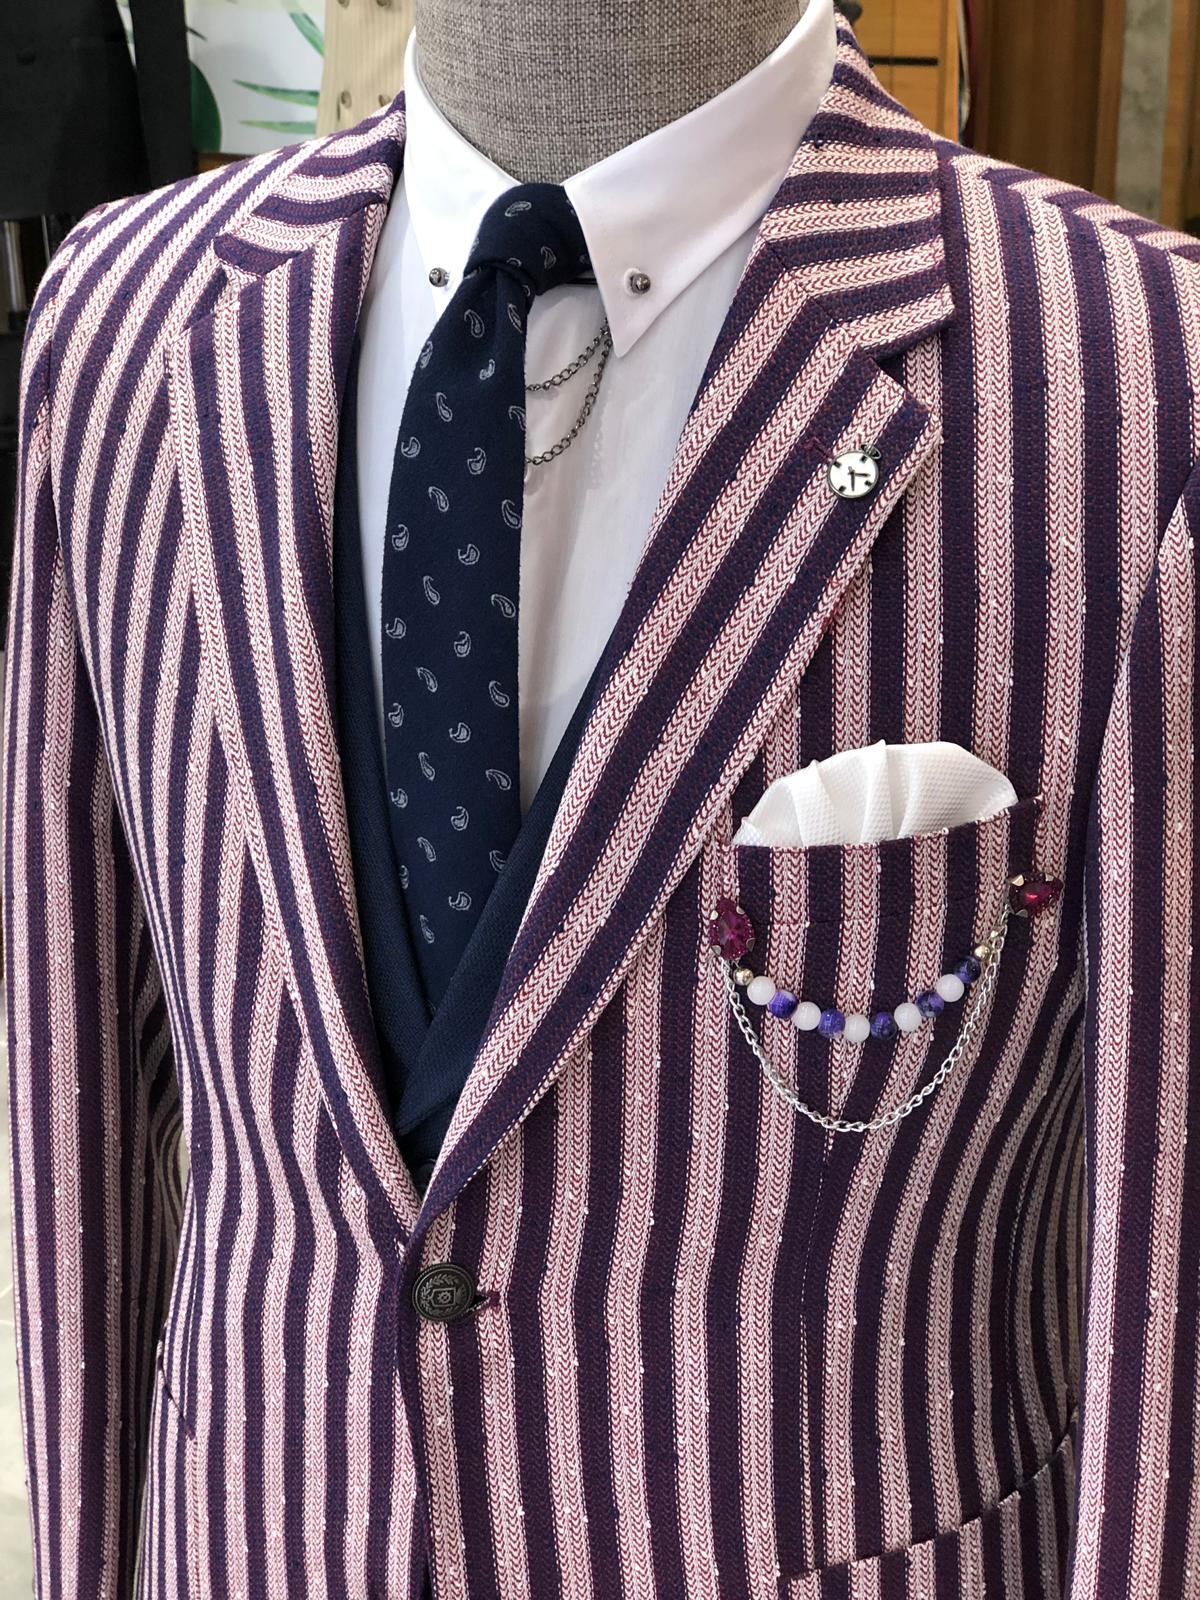 Pinkos Slim-Fit Striped Suit Vest Claret red-baagr.myshopify.com-suit-BOJONI